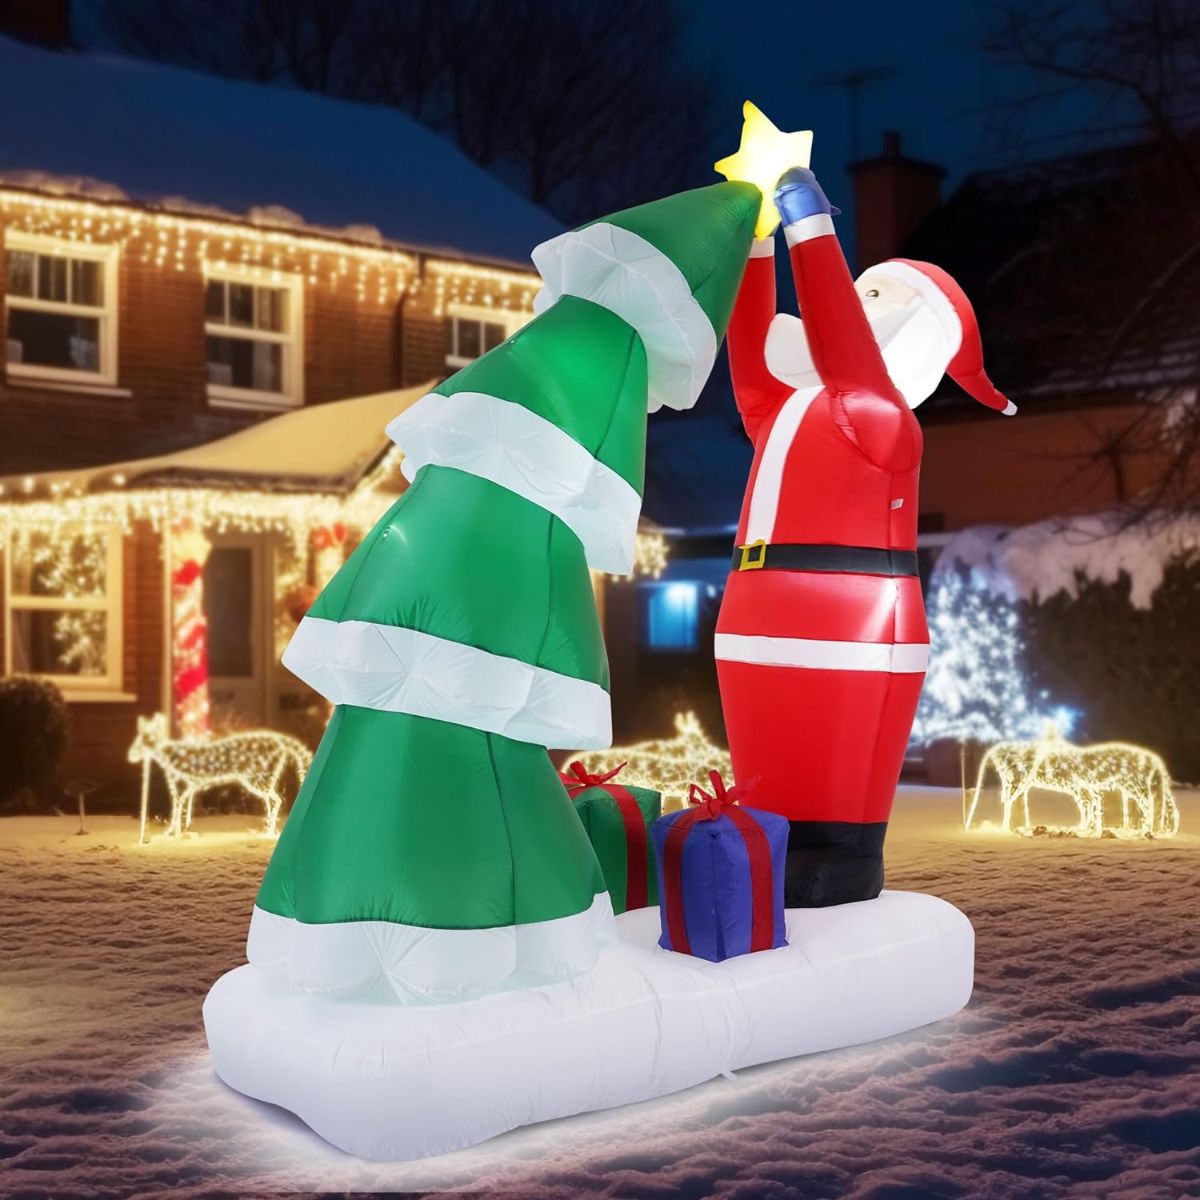 8-ft Inflatable Christmas Tree with Santa